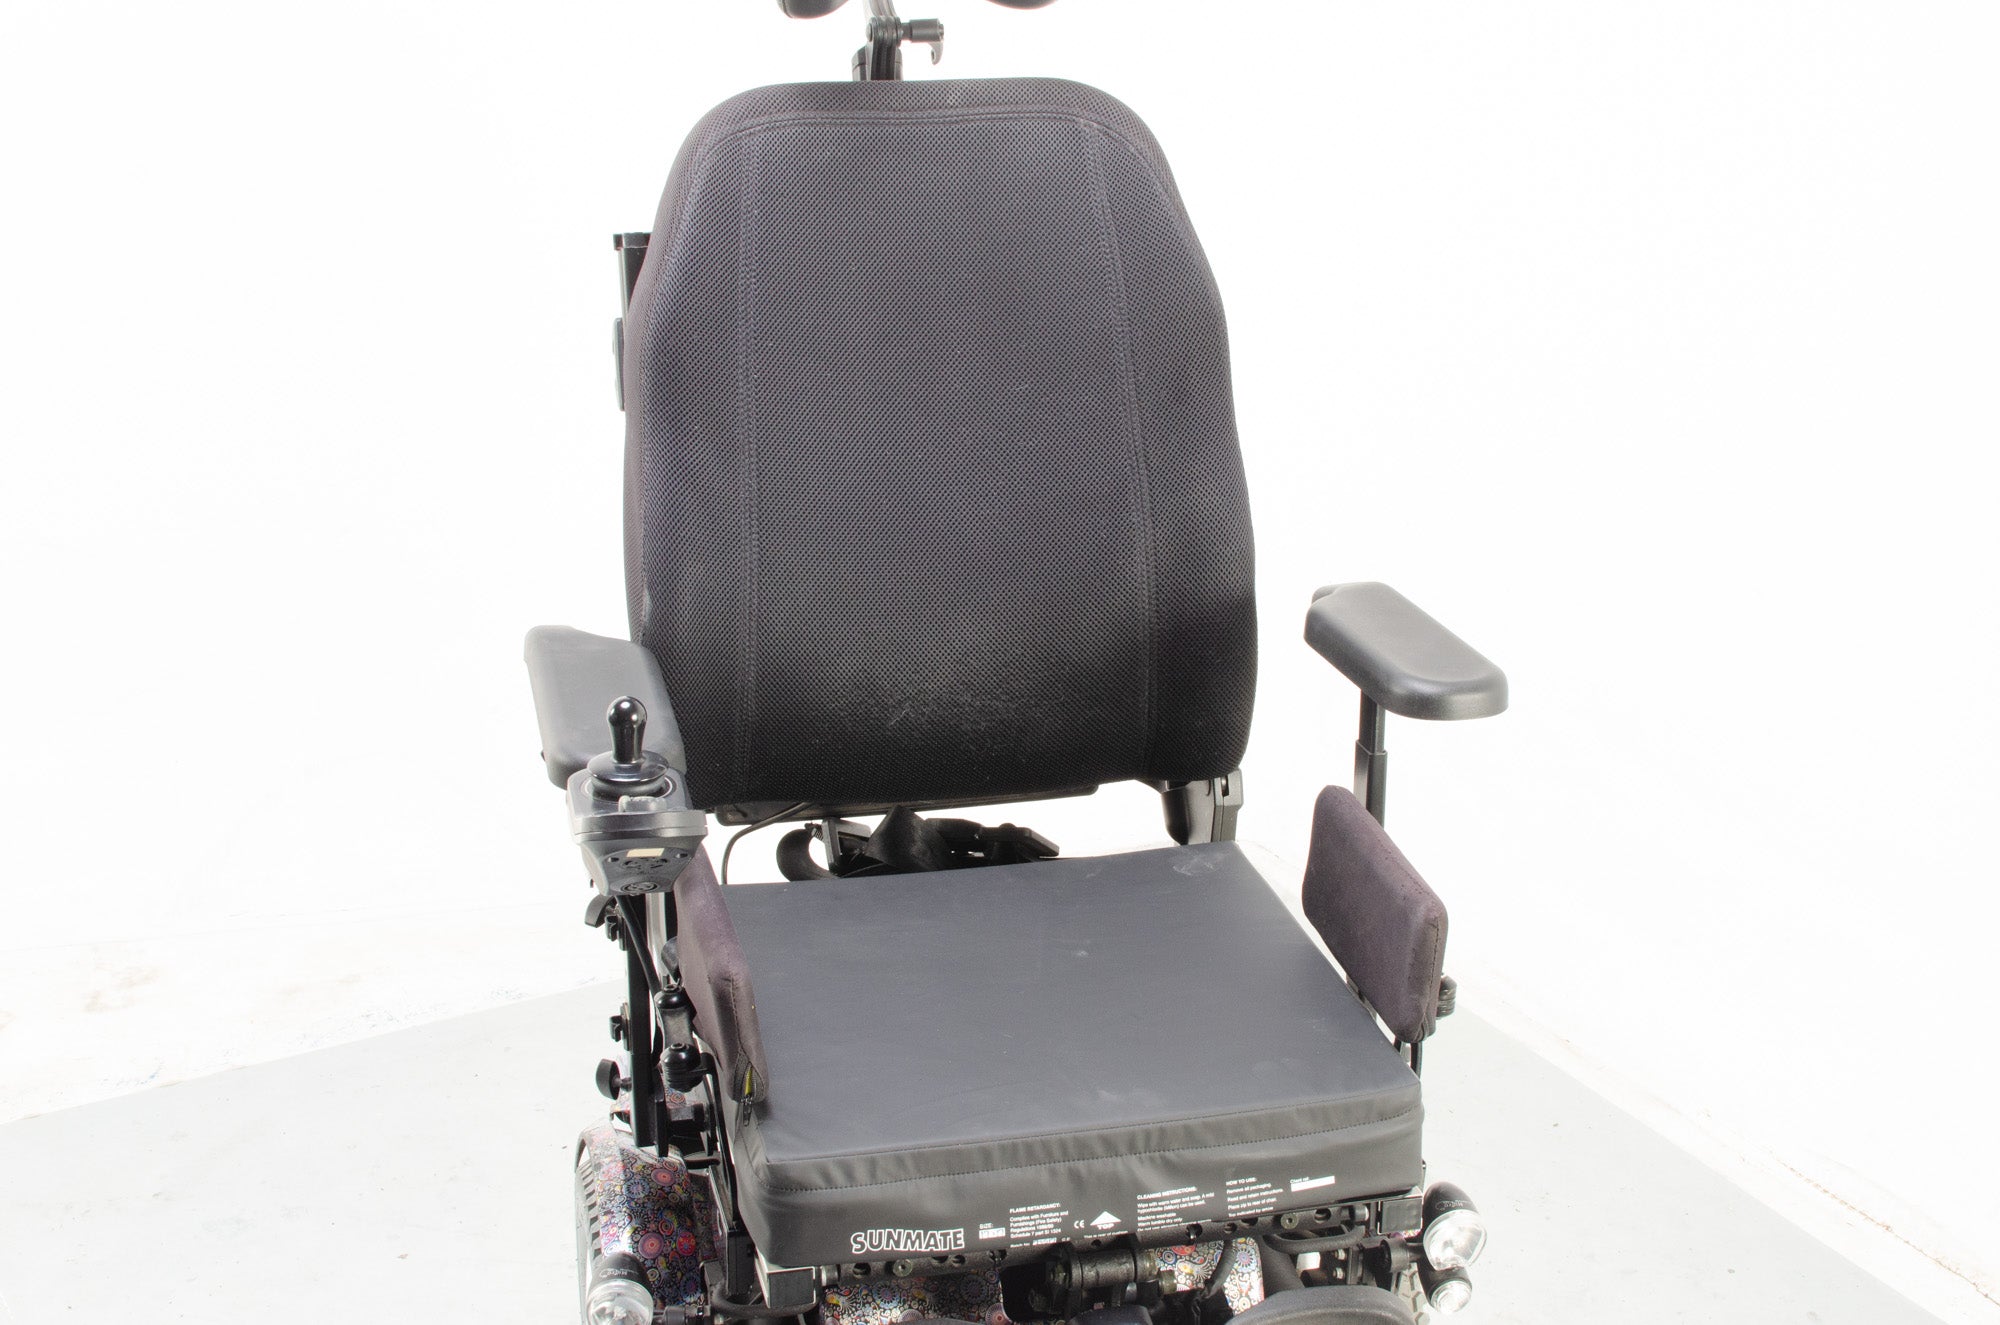 2016 Invacare TDX SP2 Wheelchair Powerchair 8mph Electric Riser Tilt Recline Leg RaiserMobility